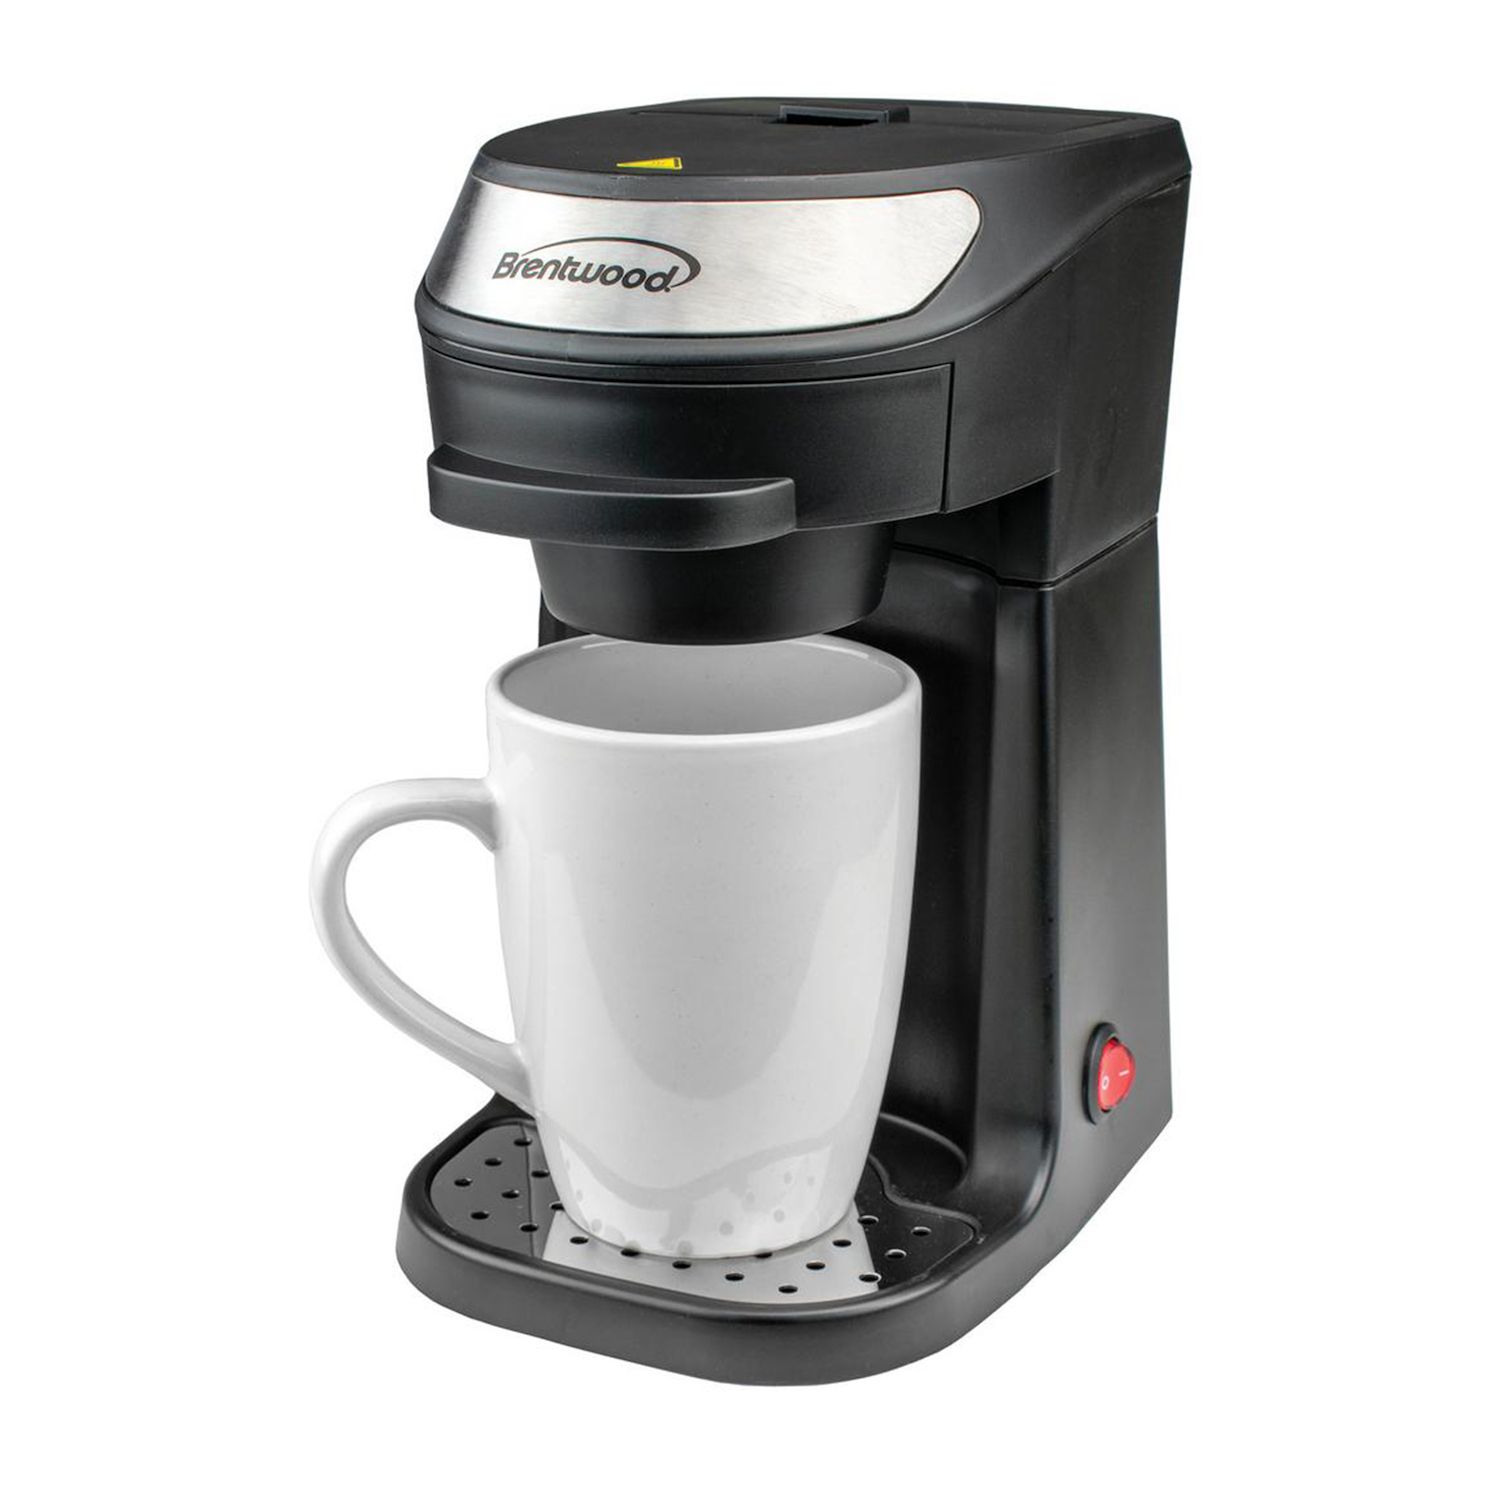 Brentwood TS 222BK 12 Cup Digital Coffee Maker Black Programmable